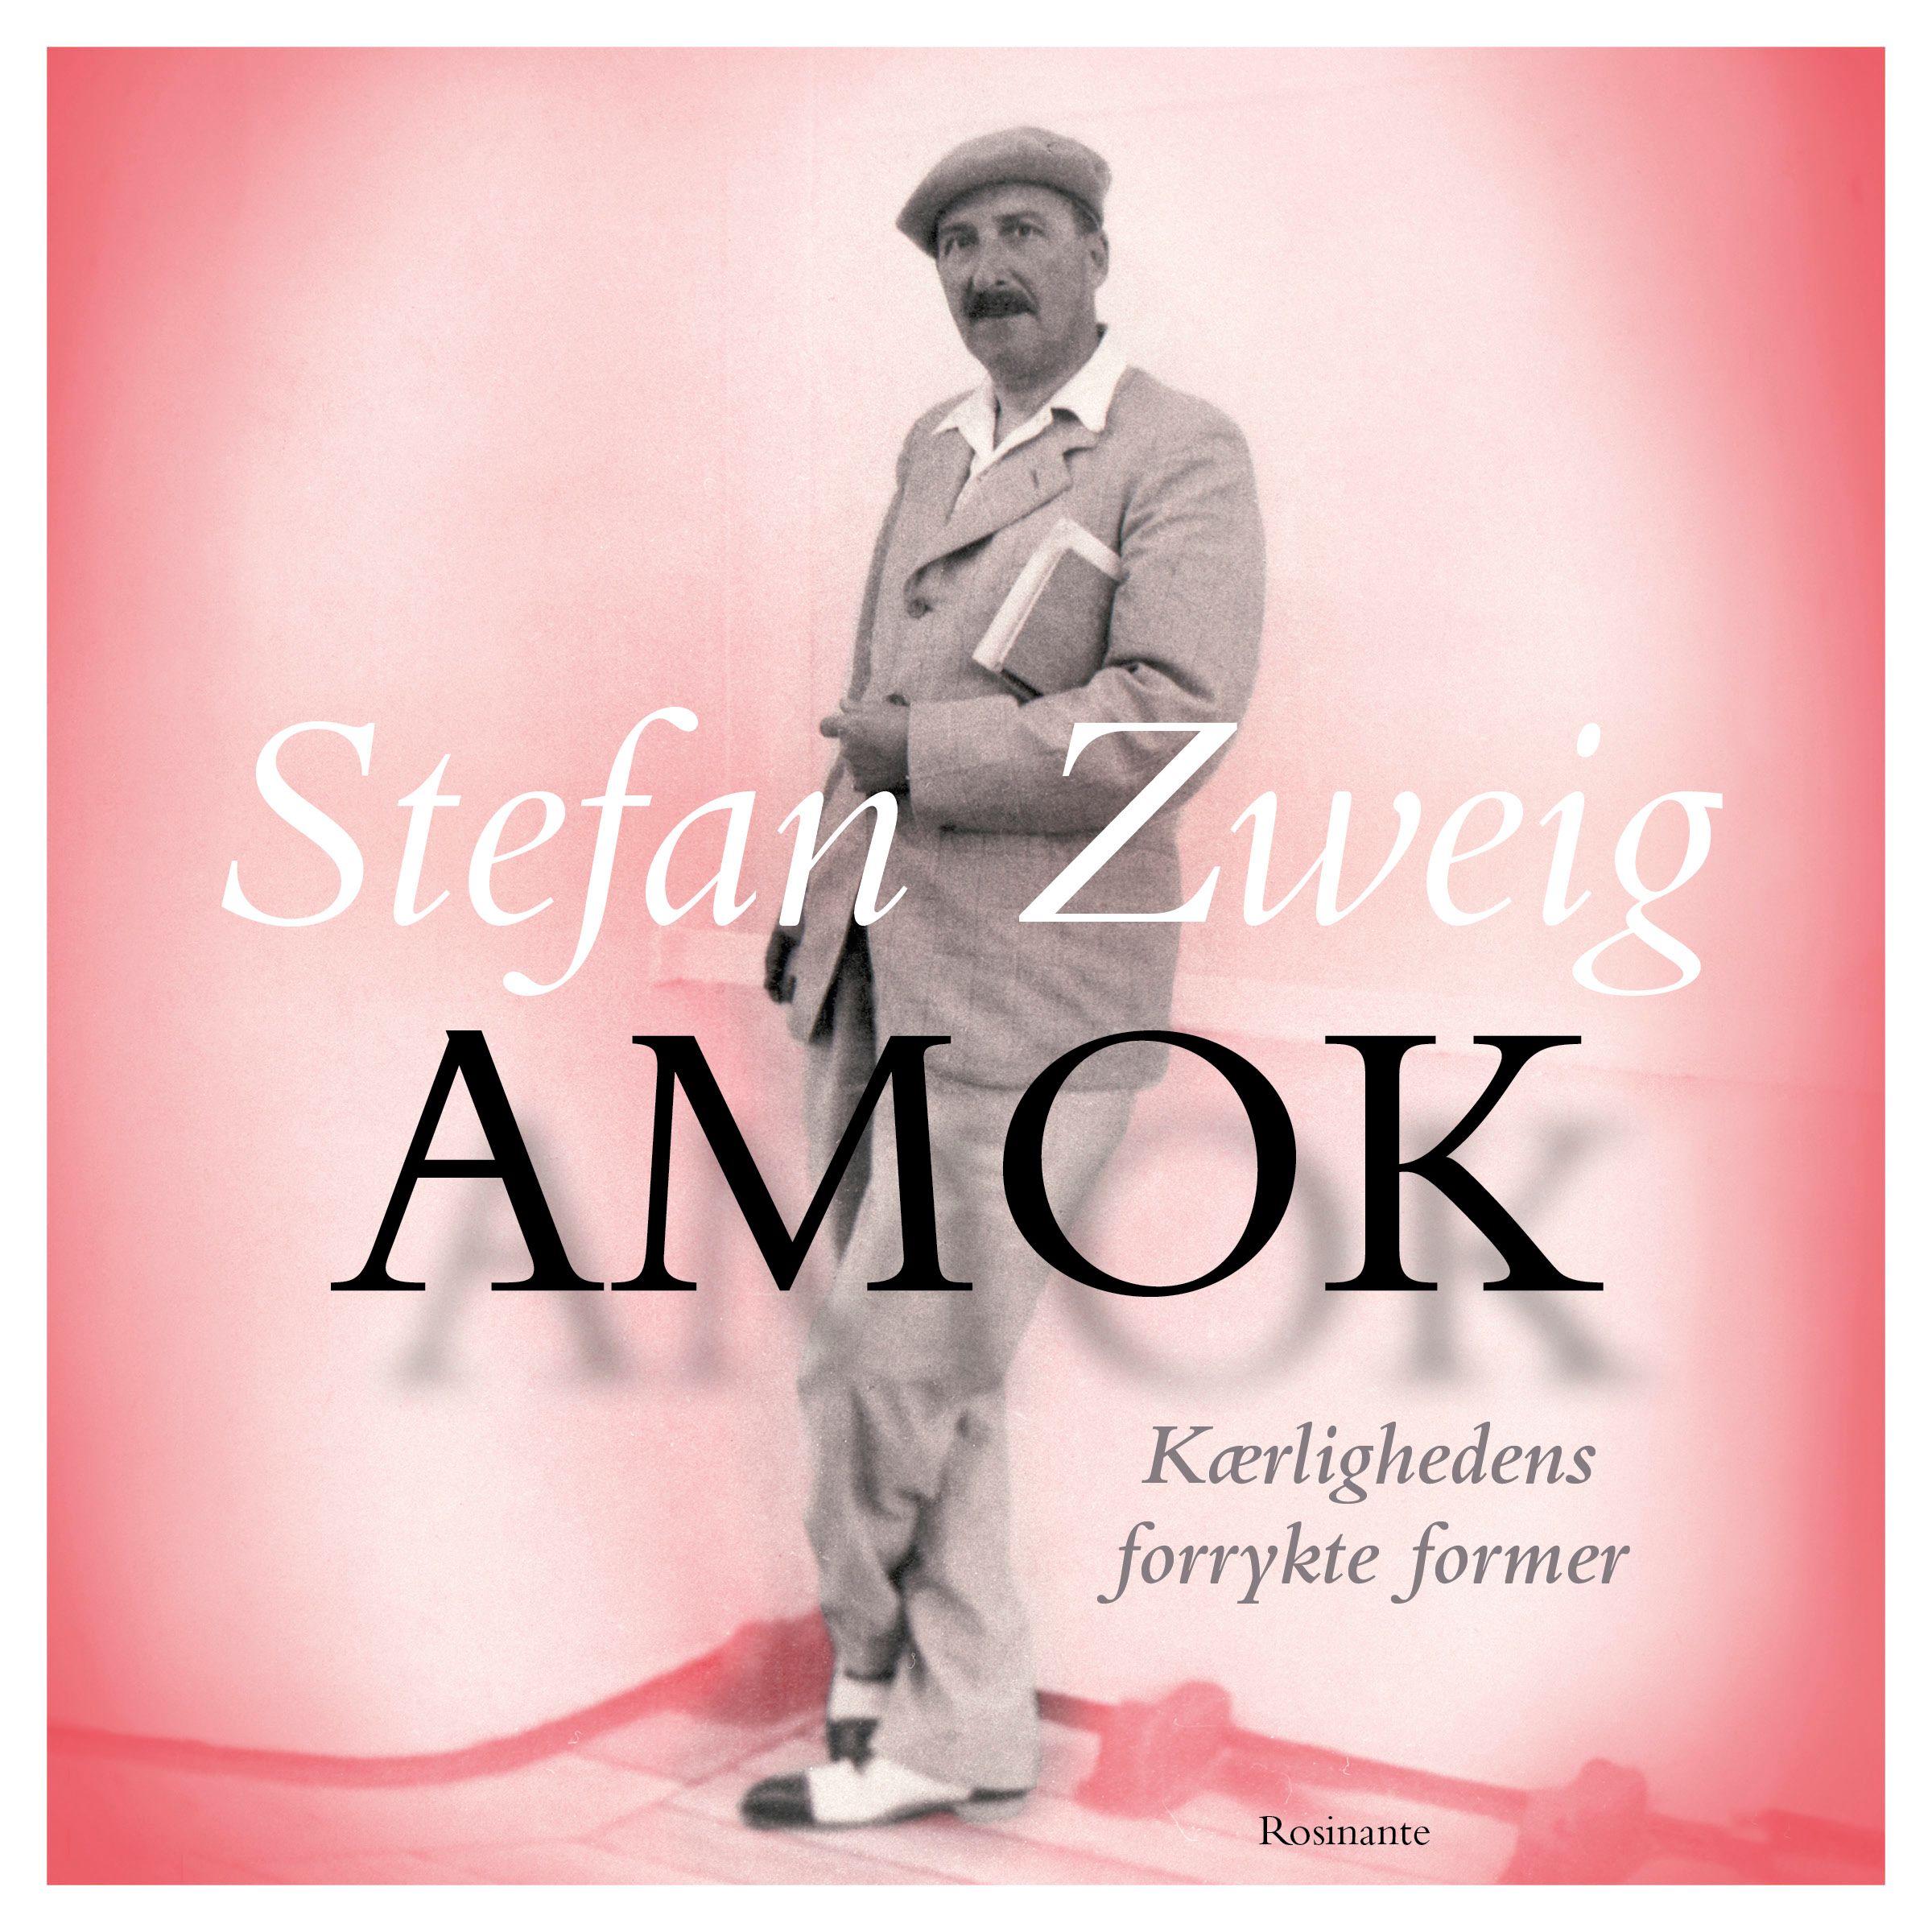 Amok, ljudbok av Stefan Zweig